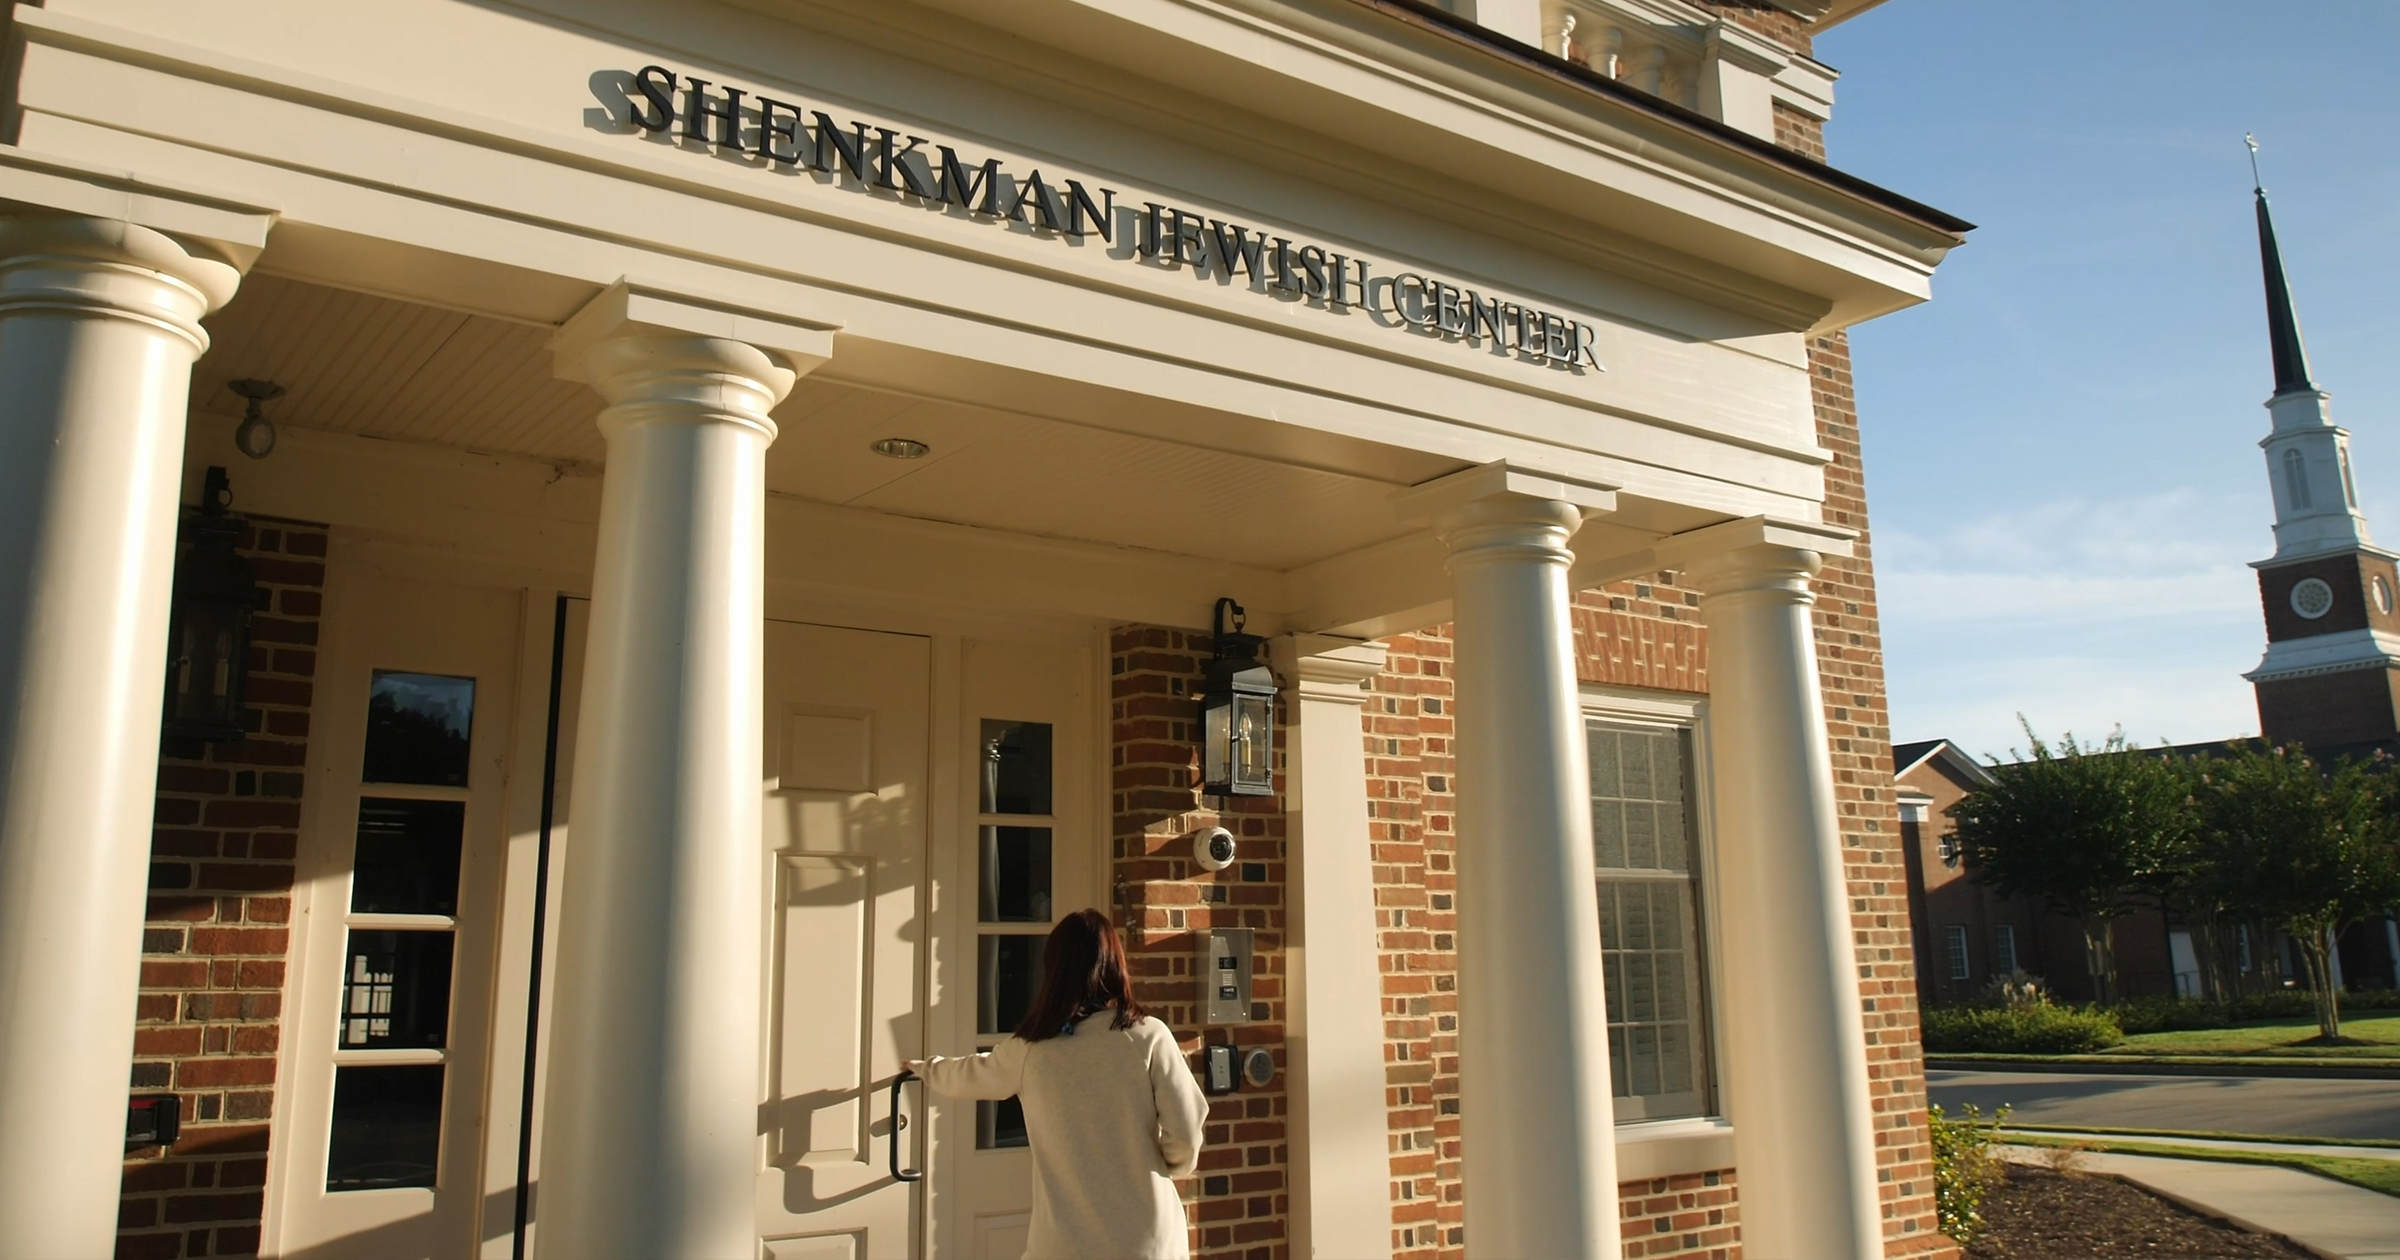 Shenkman Jewish Center: One Year Later